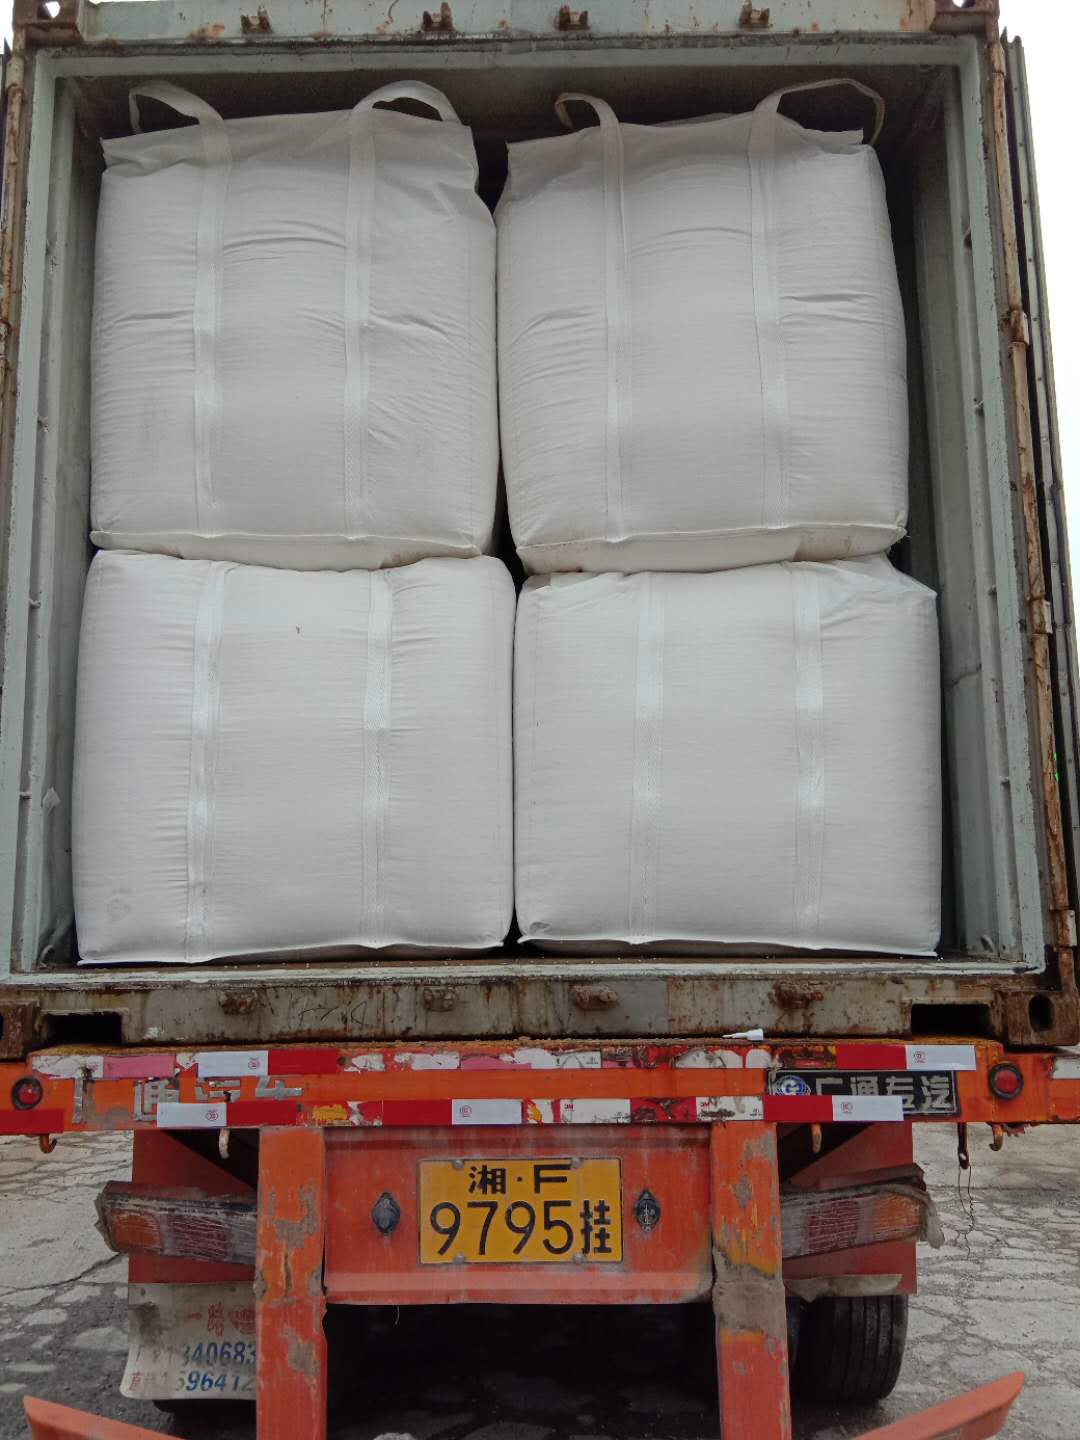 granular ammonium sulphate Jumbo Bag package